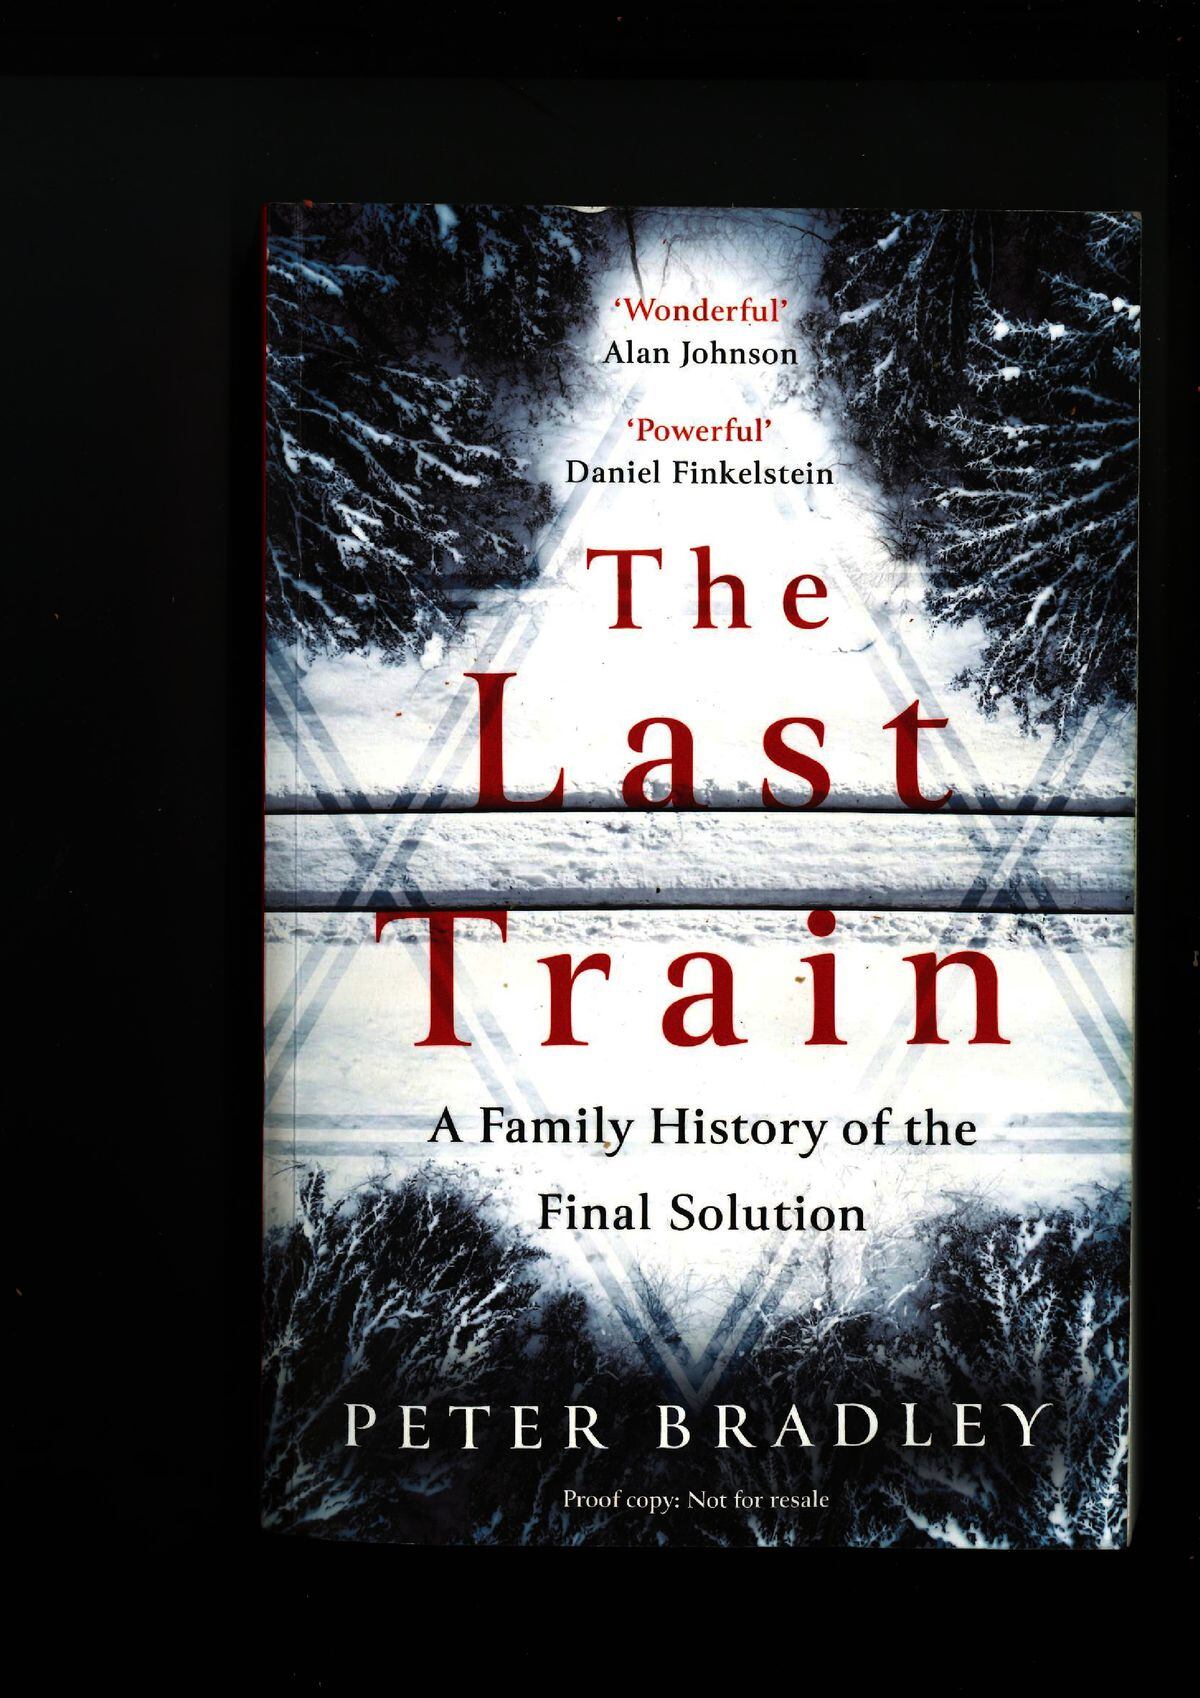 The Last Train by Peter Bradley